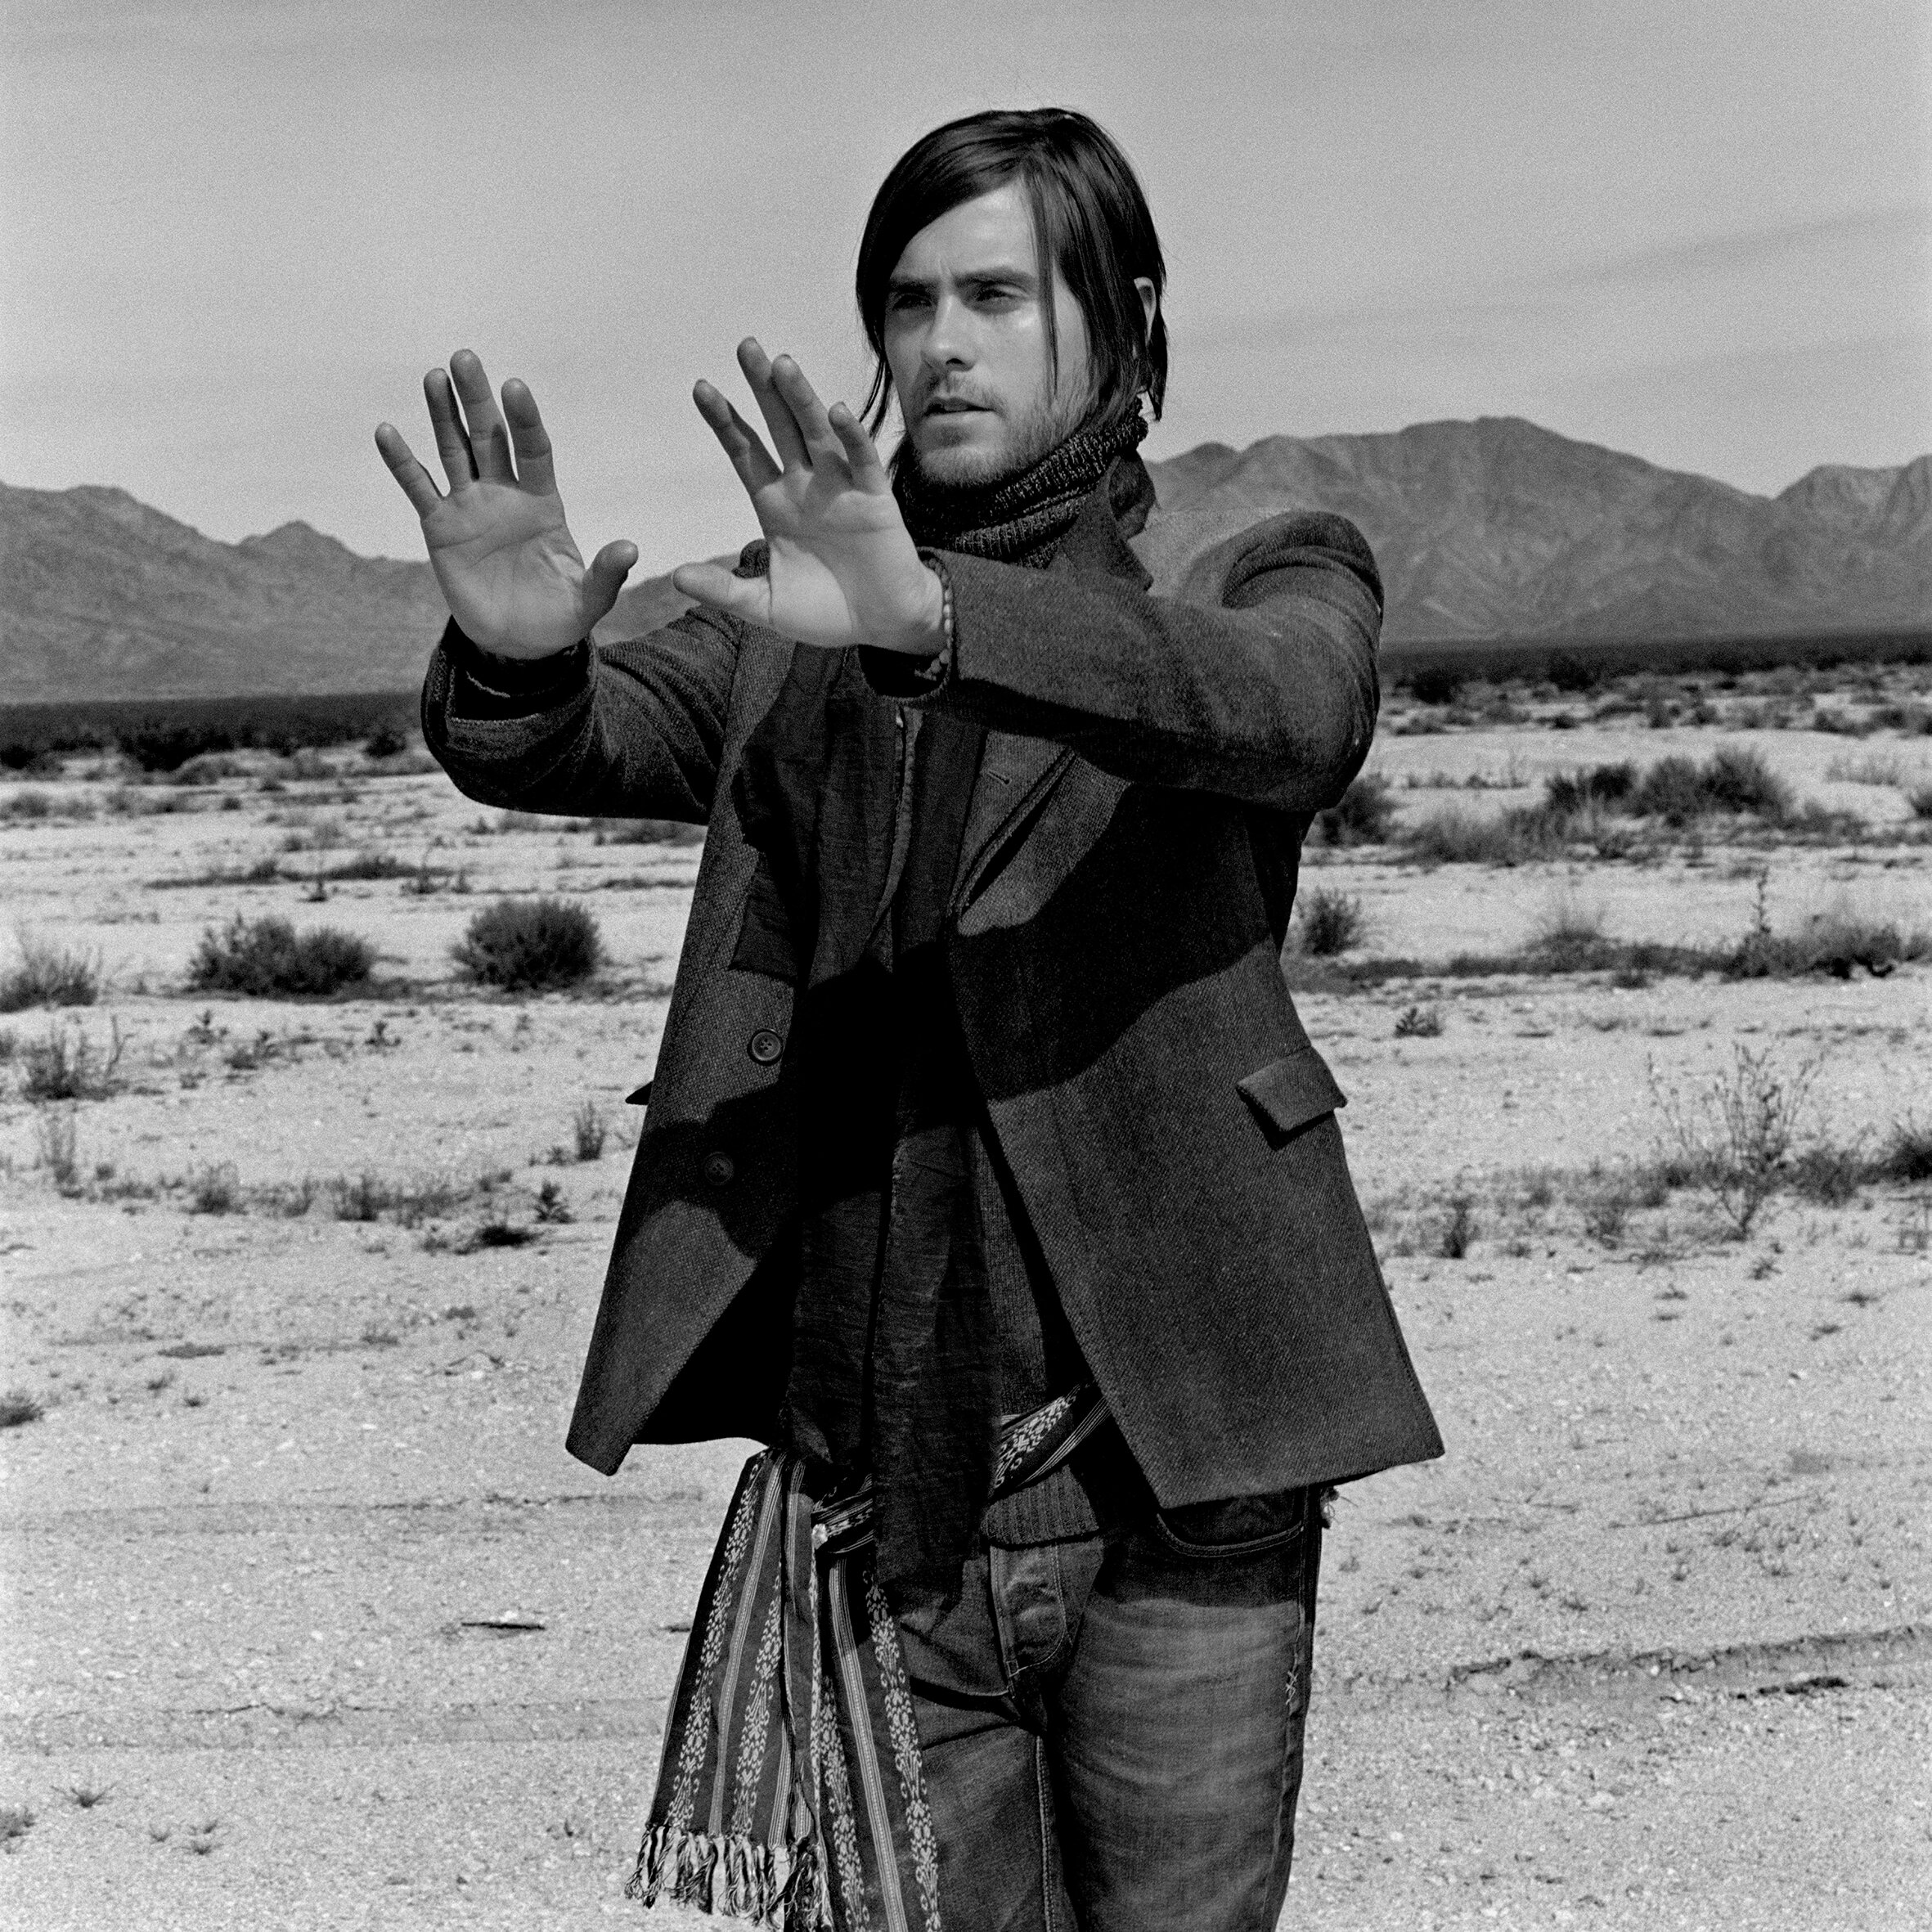 Jared Leto 7 (30 Seconds to Mars), Mojave Desert, 2005.jpg